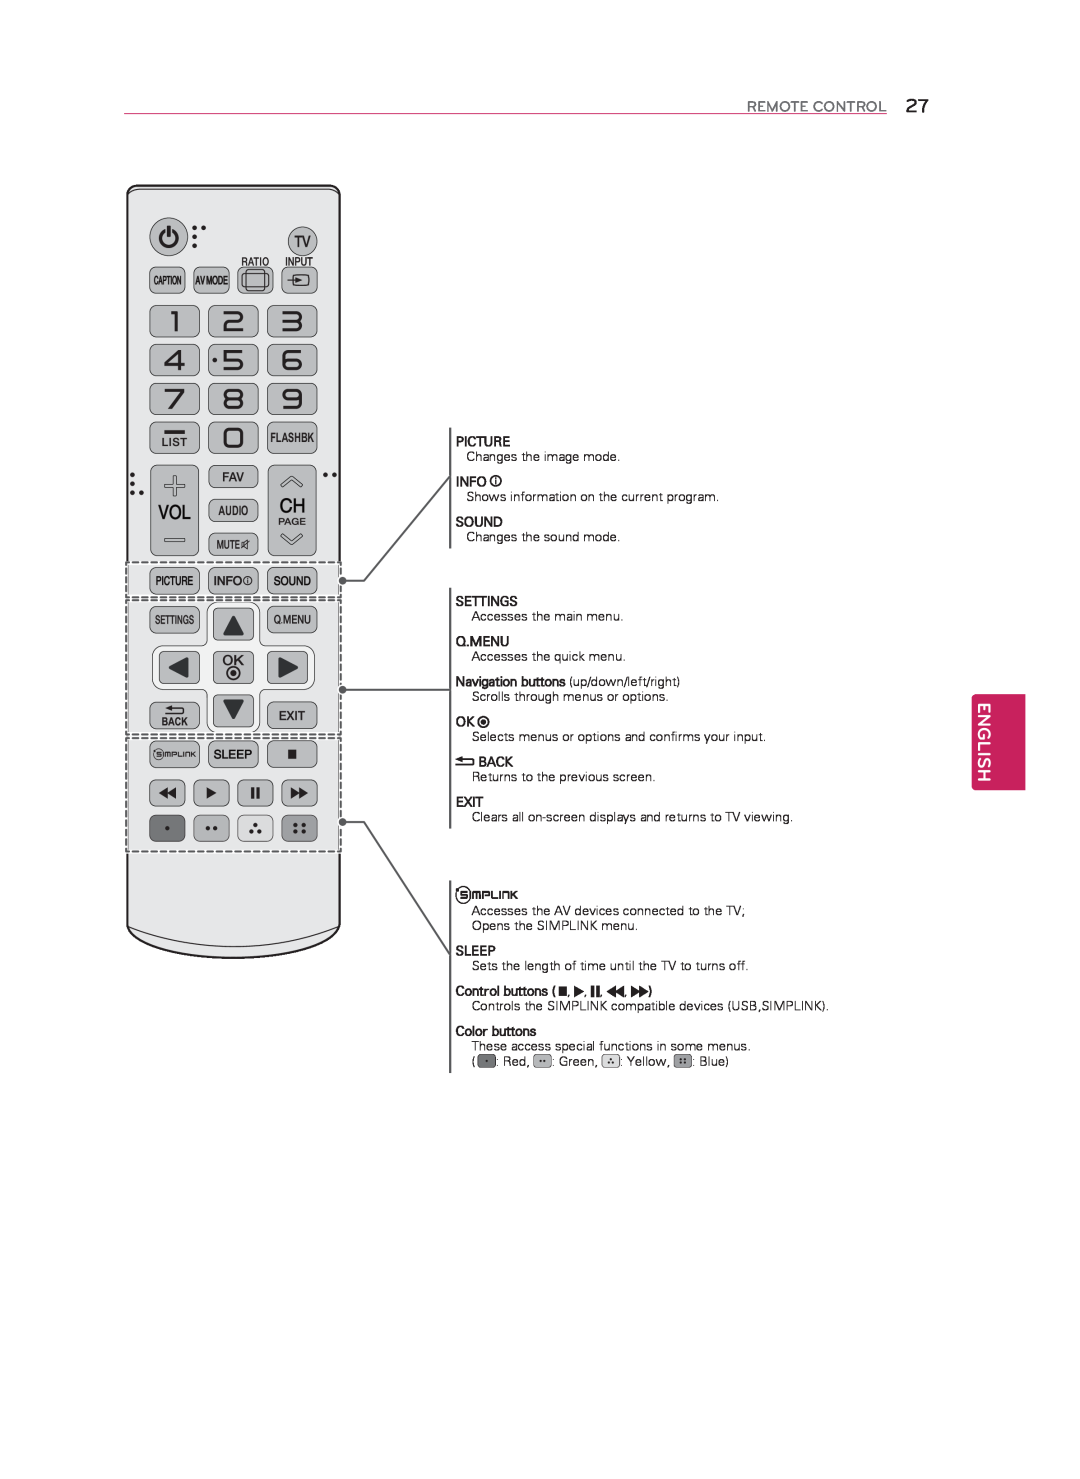 LG Electronics 60LN5400 owner manual Remote Control 